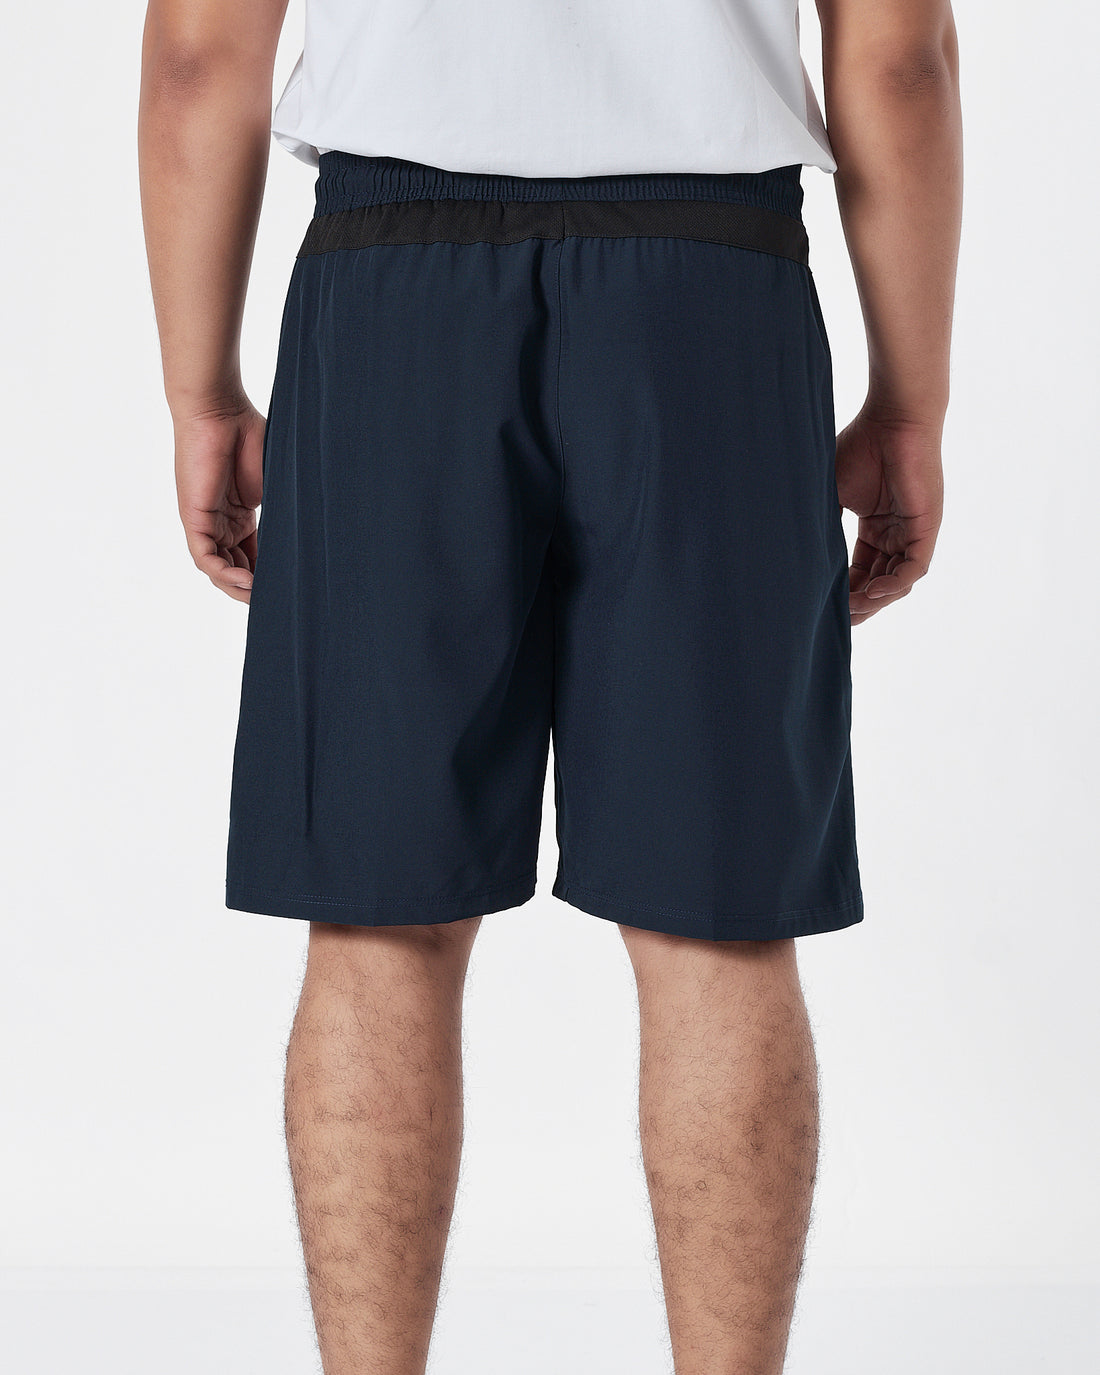 NIK Logo Printed Men Blue Track Shorts 12.90